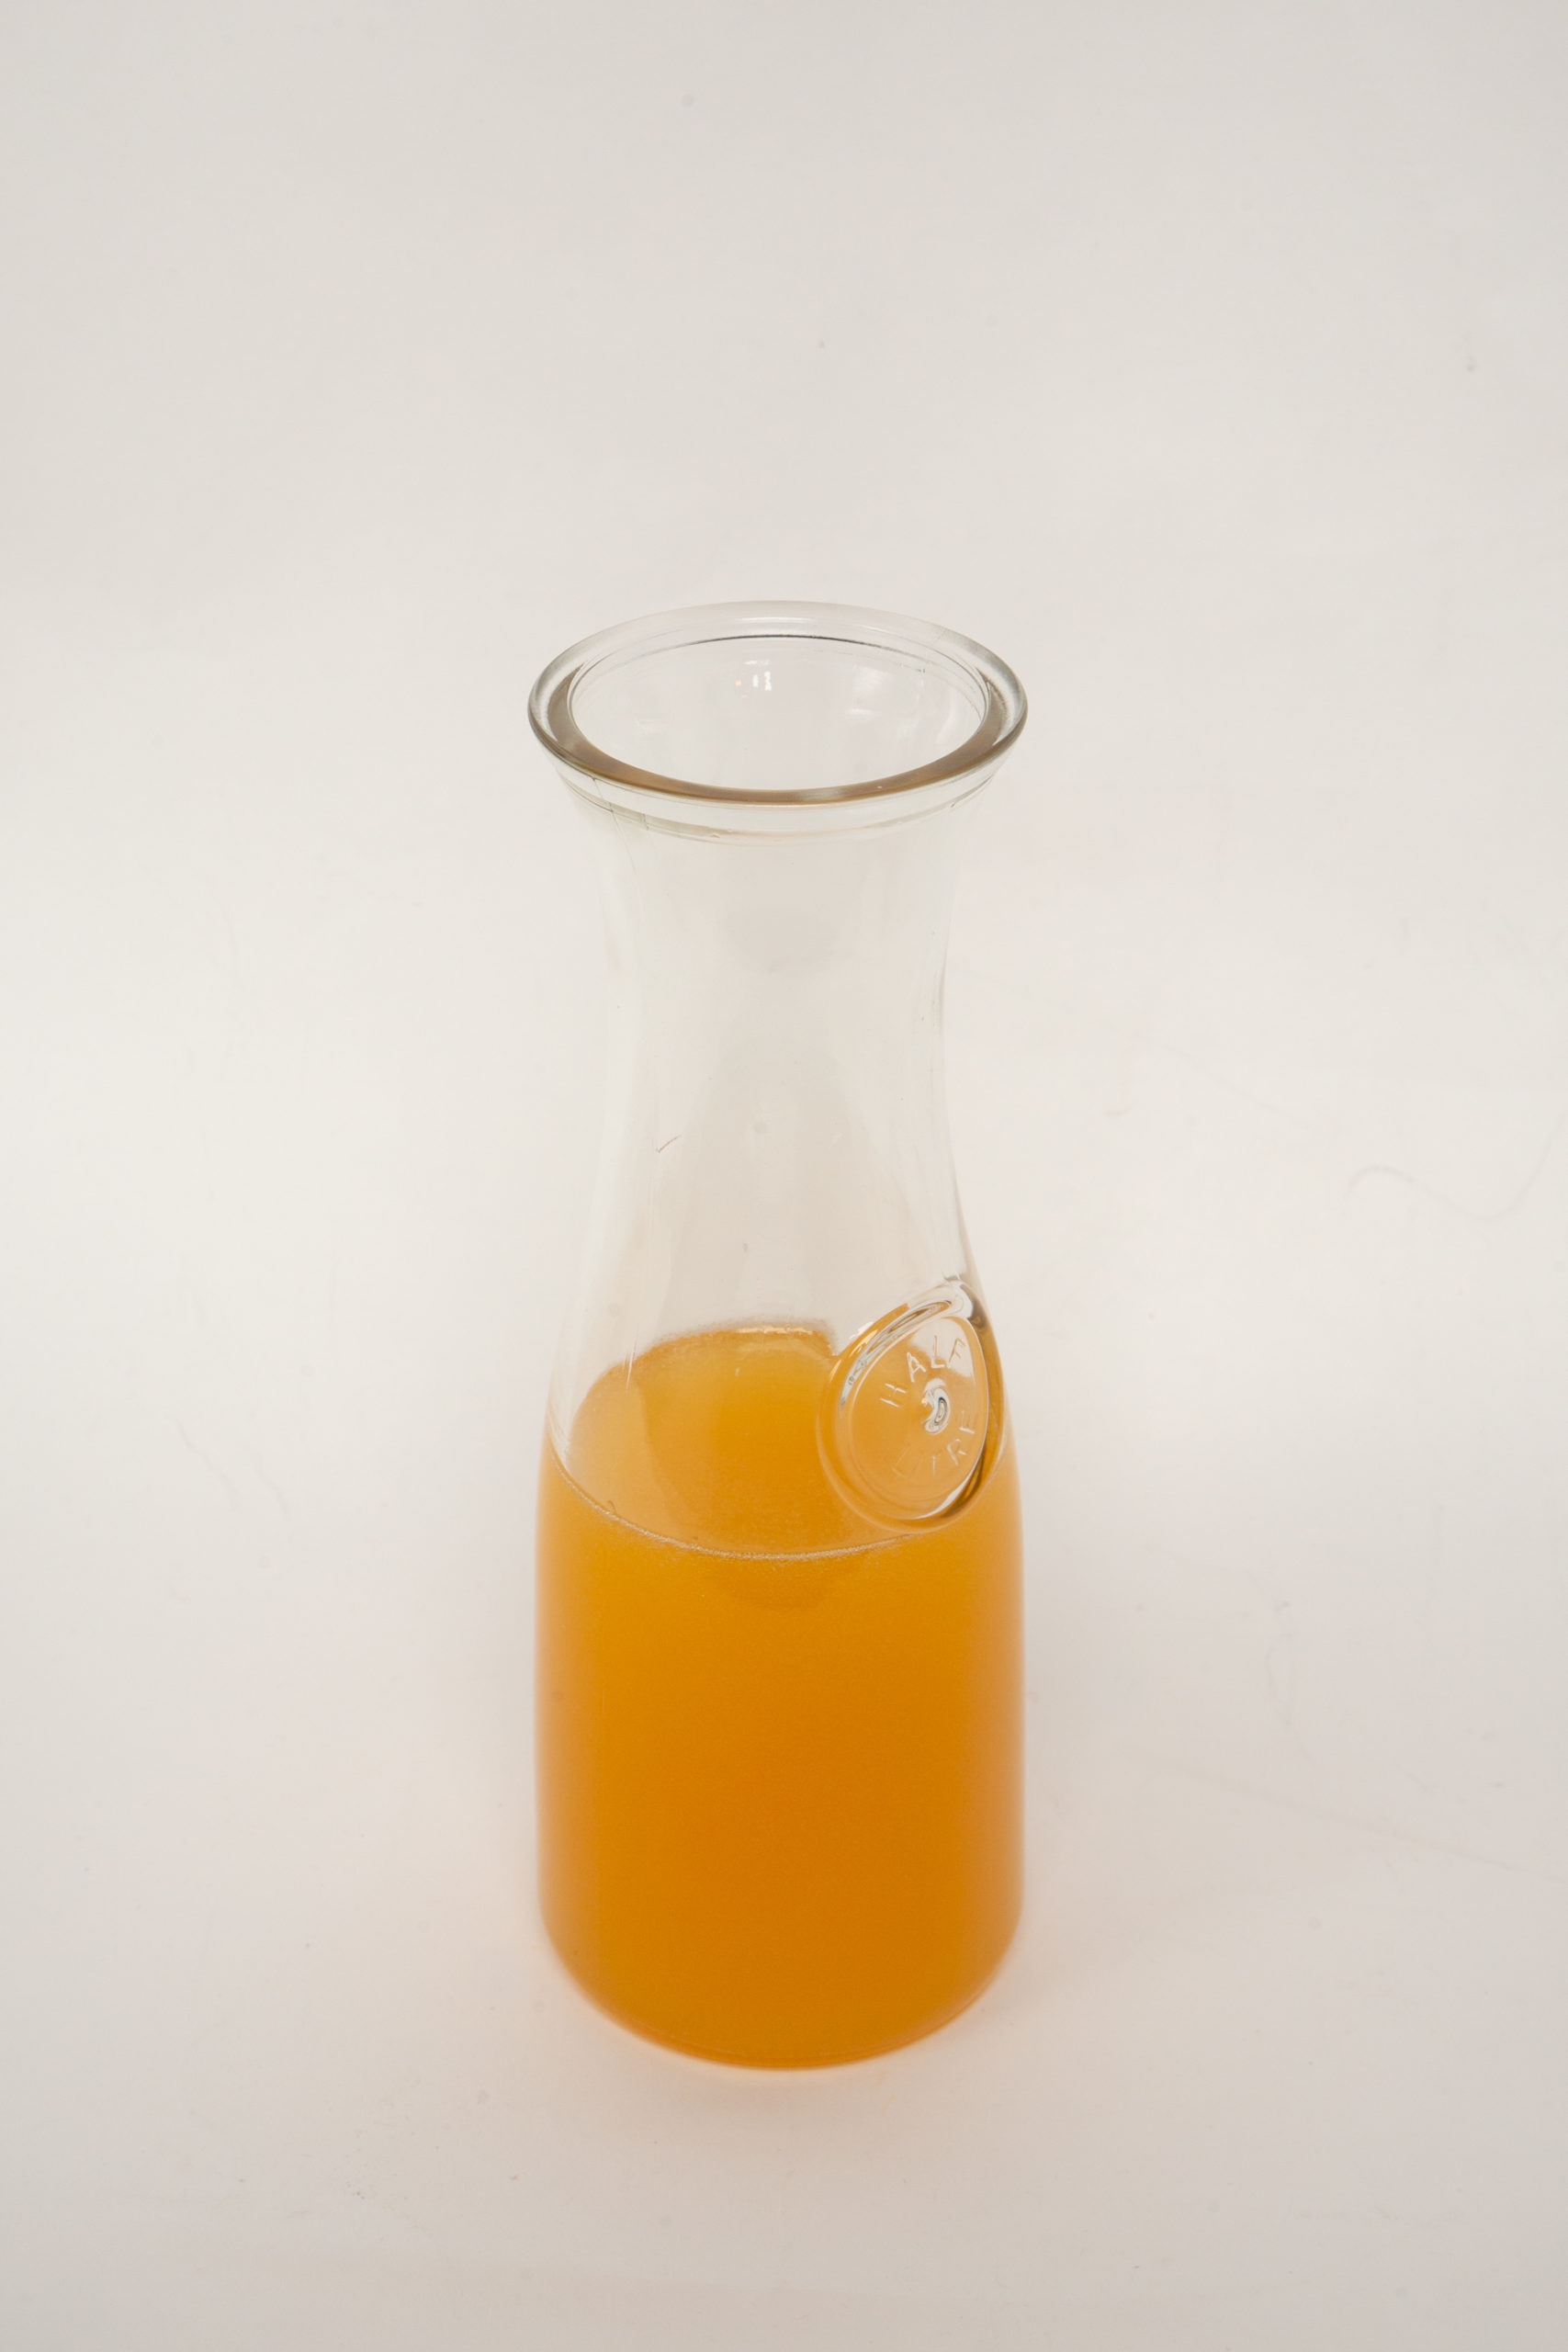 Vintage 1 Quart Orange Juice Carafe 